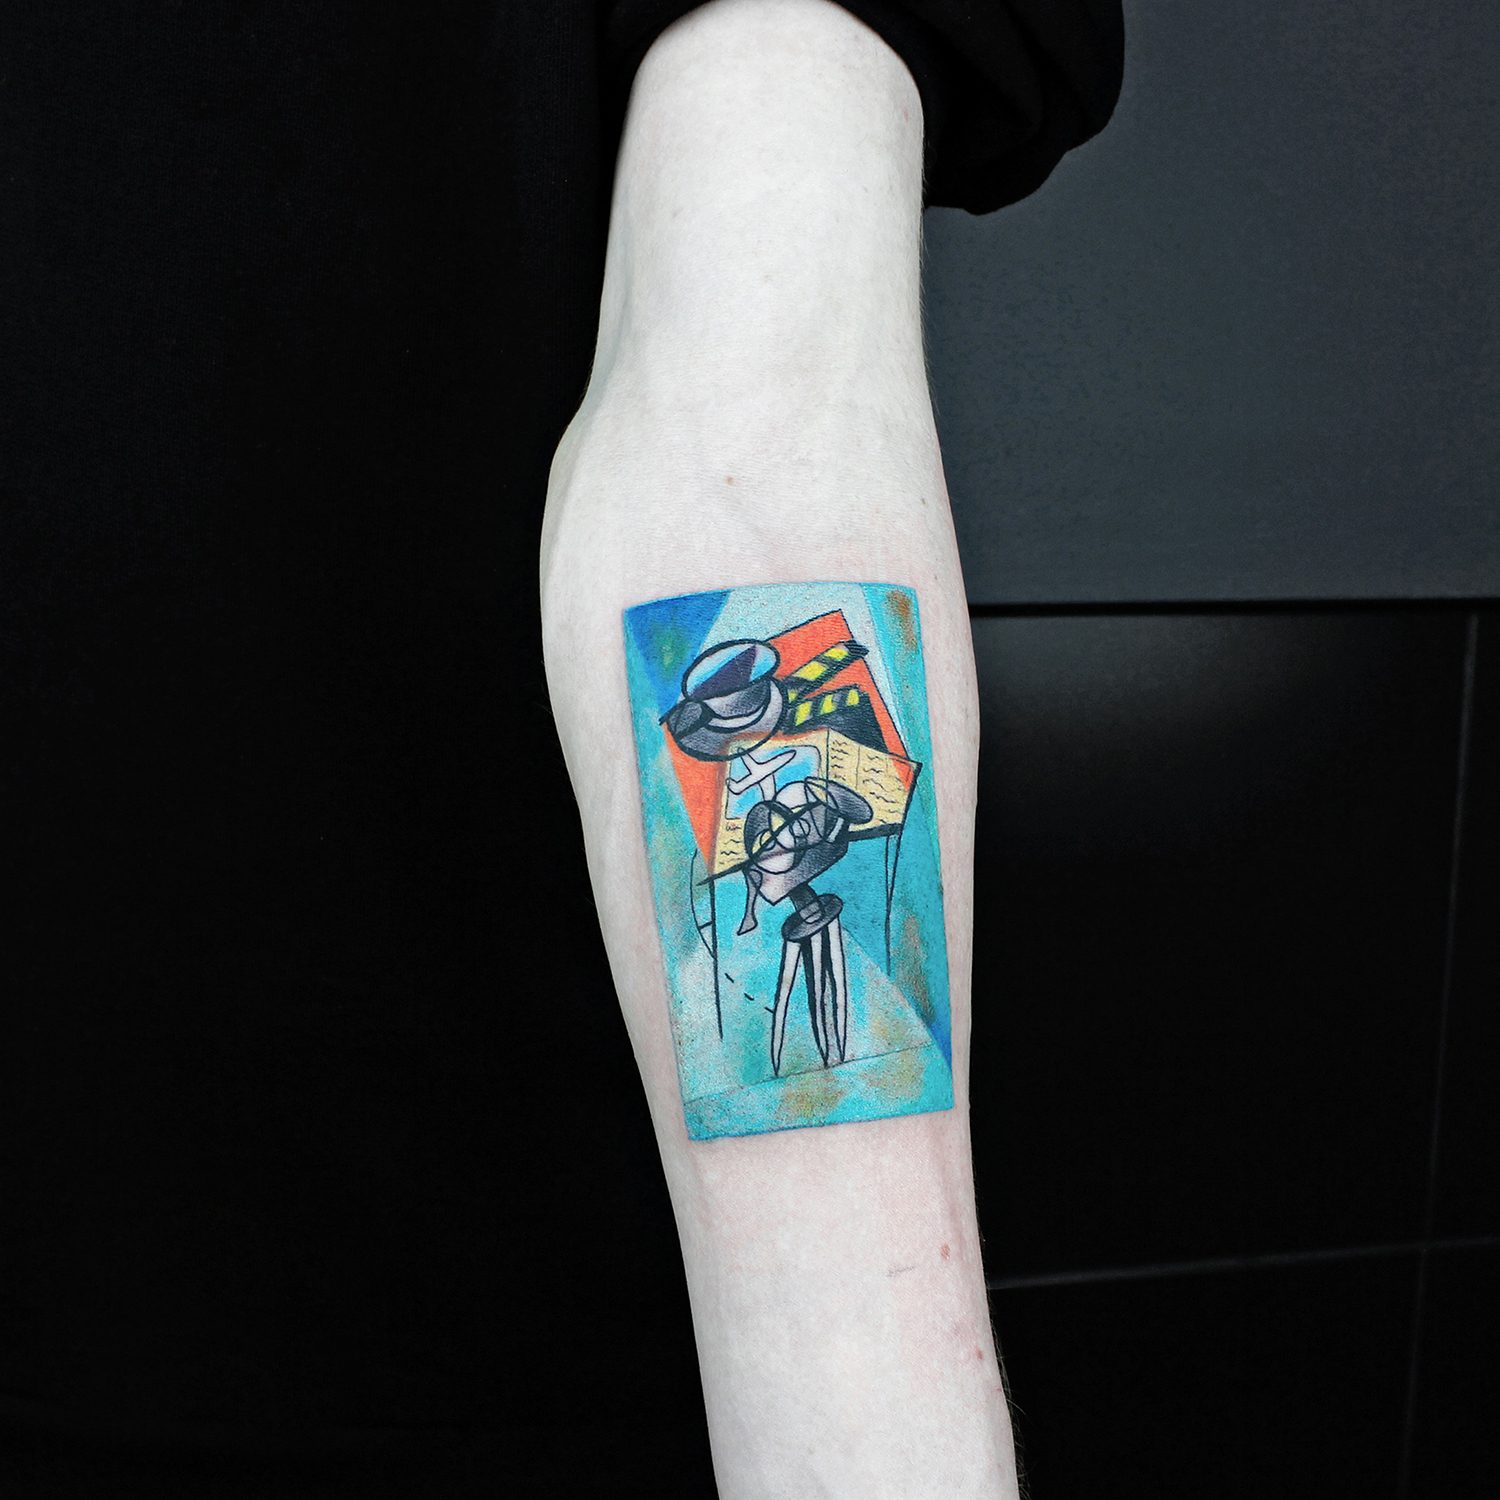 painterly tattoo on arm